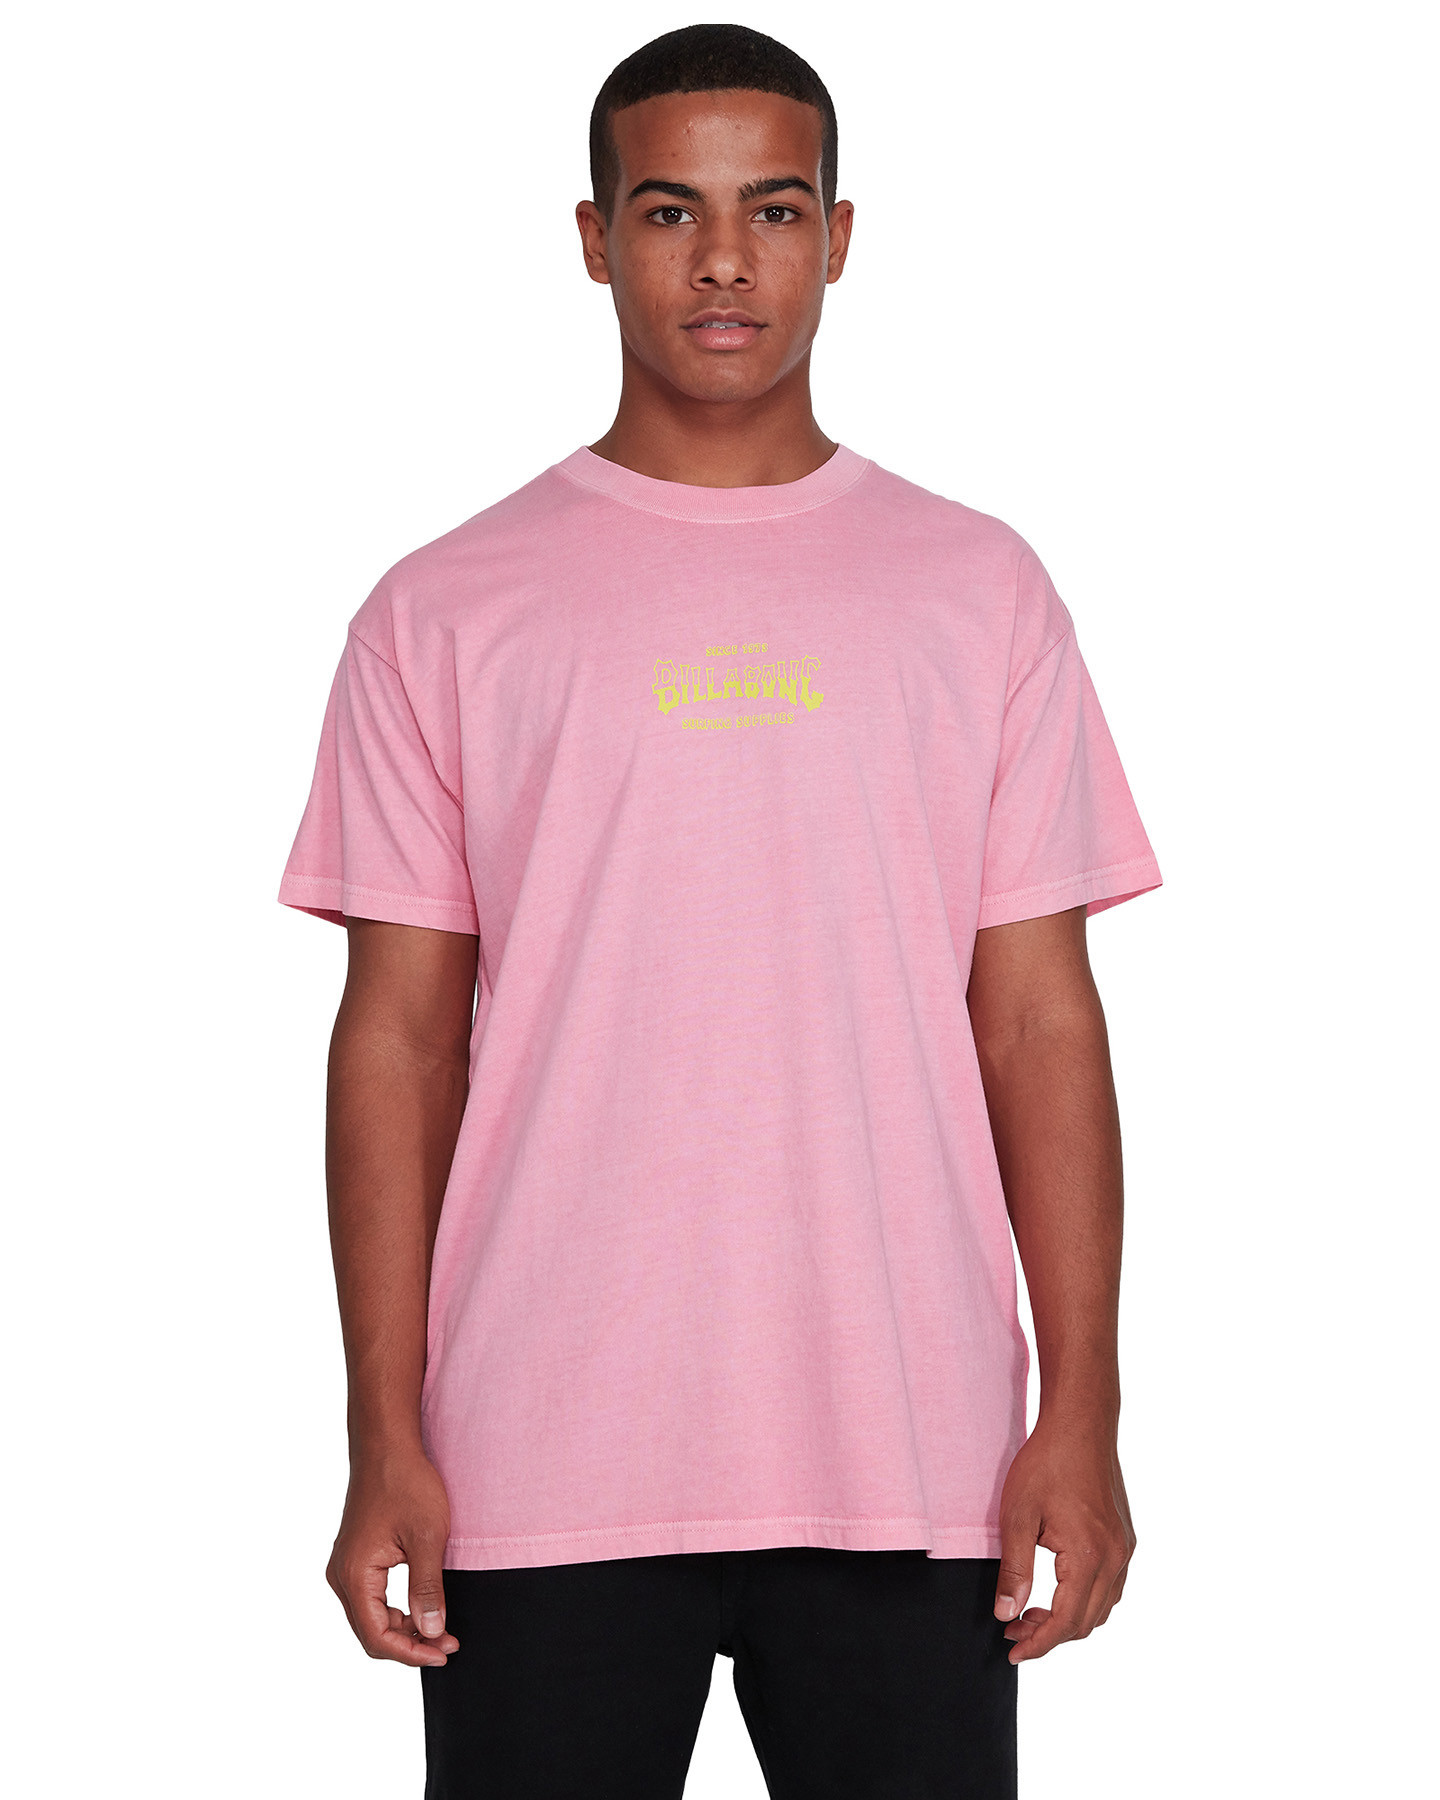 Billabong Surf Supply Short Sleeve Tee - Retro Pink | SurfStitch